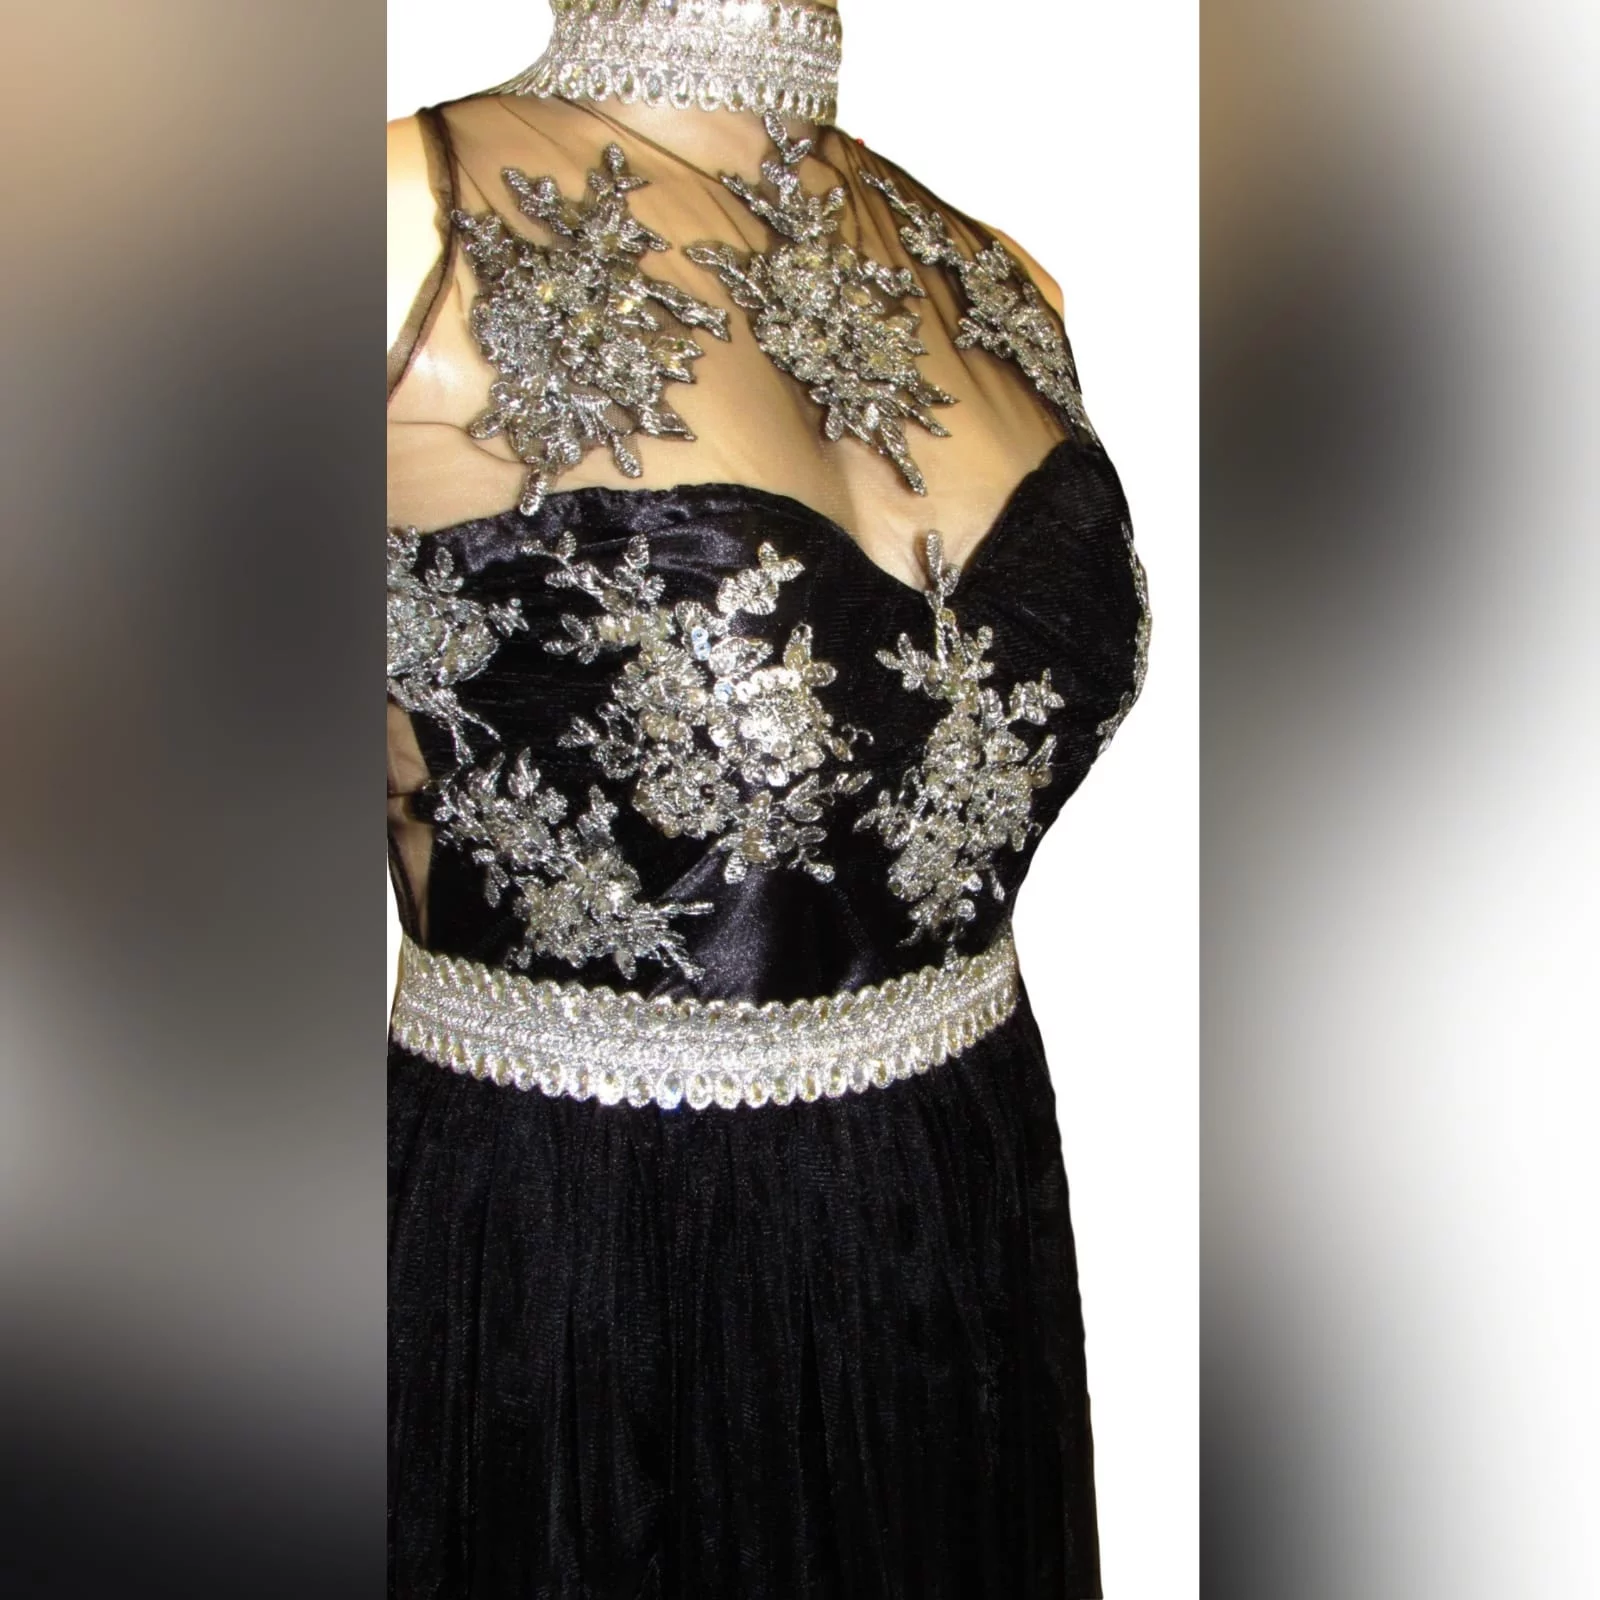 Black & silver long elegant prom dress 2 black & silver, long & elegant prom dance dress with a triangular open back. Choker neckline and an under bust bling belt with train.